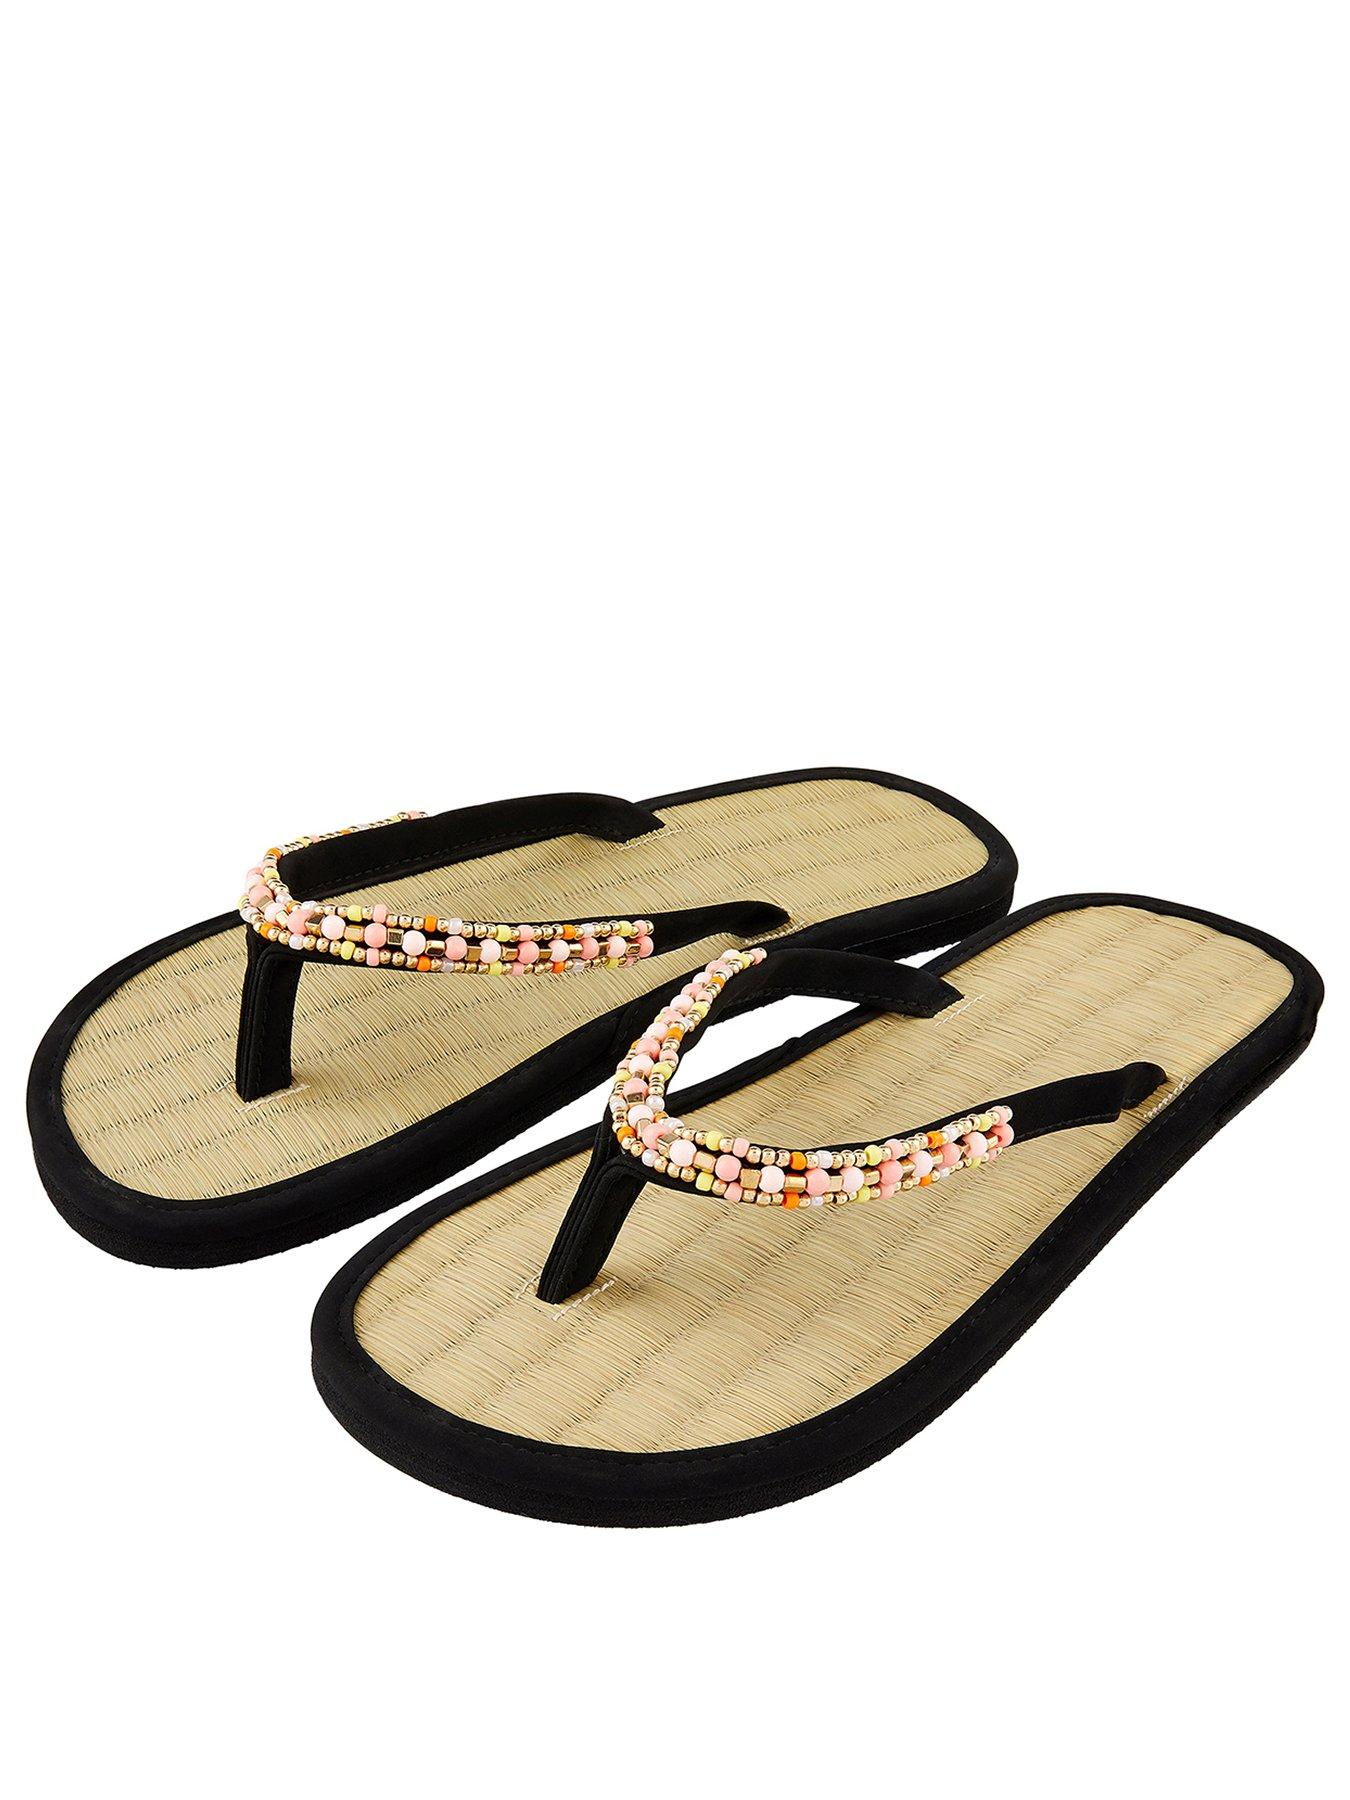 Flip Flops | Accessorize | Sandals 